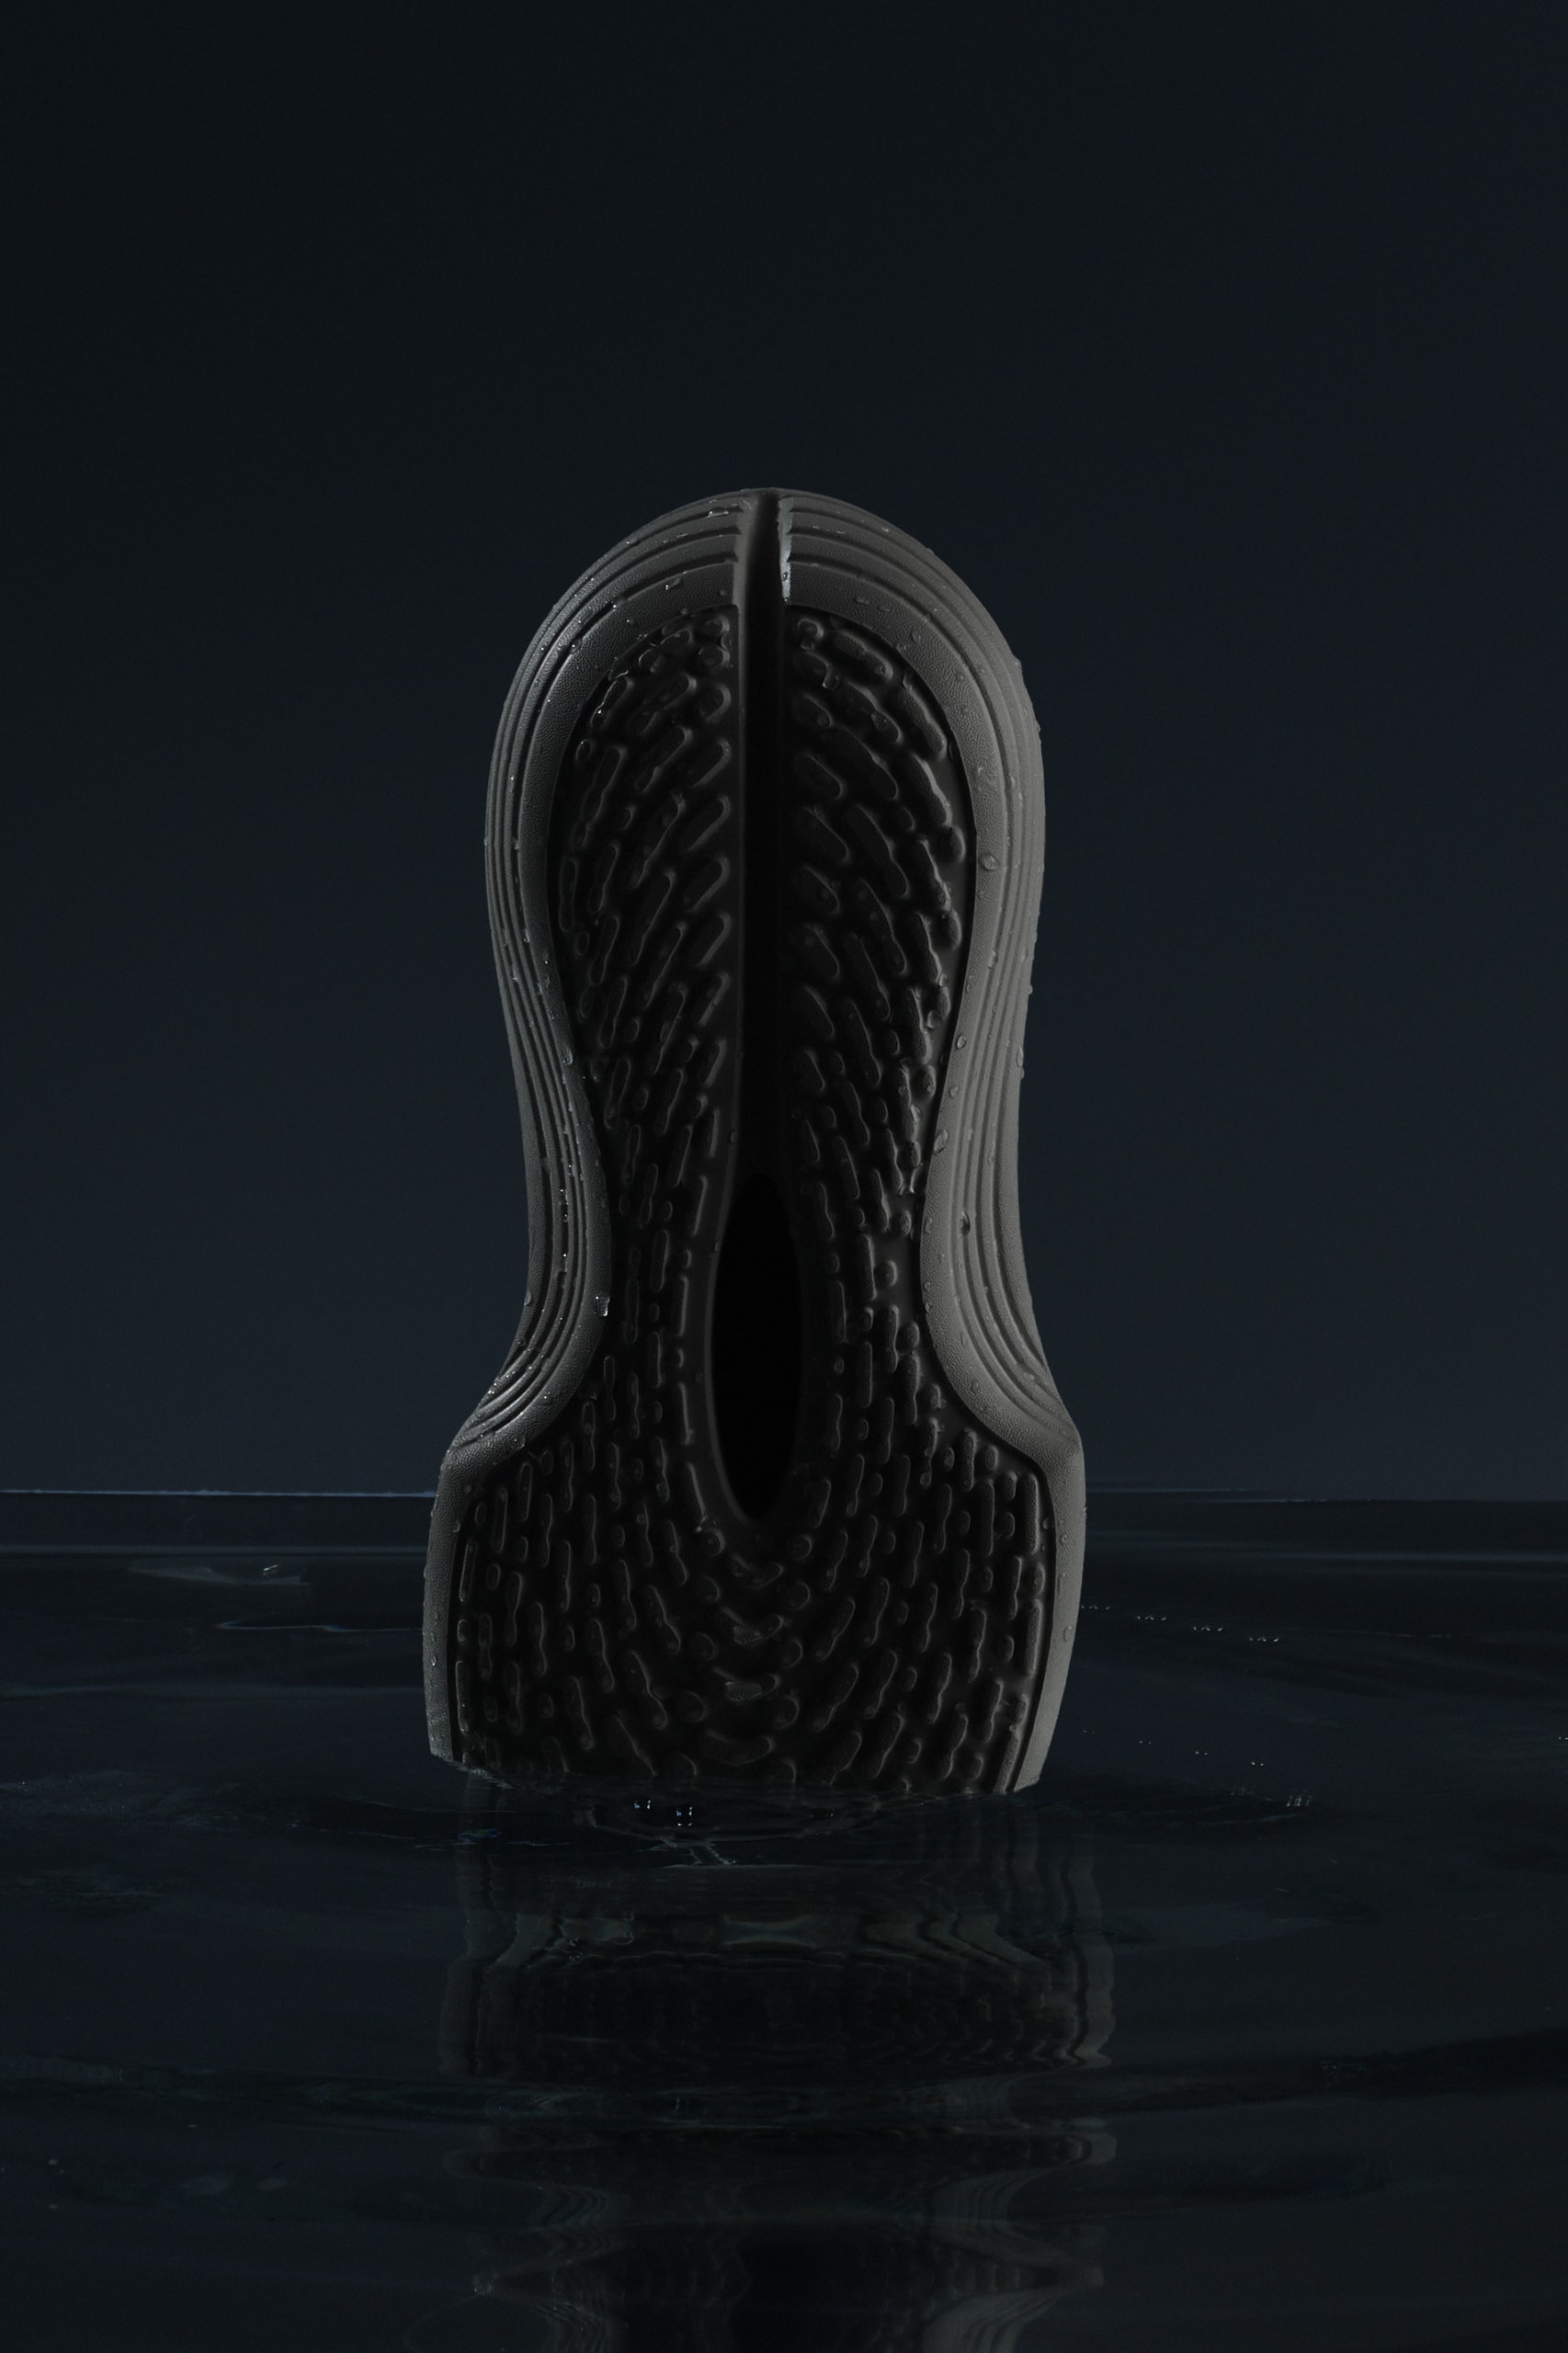 SuperLipper™ 首款鞋履 WAVE 正式发布